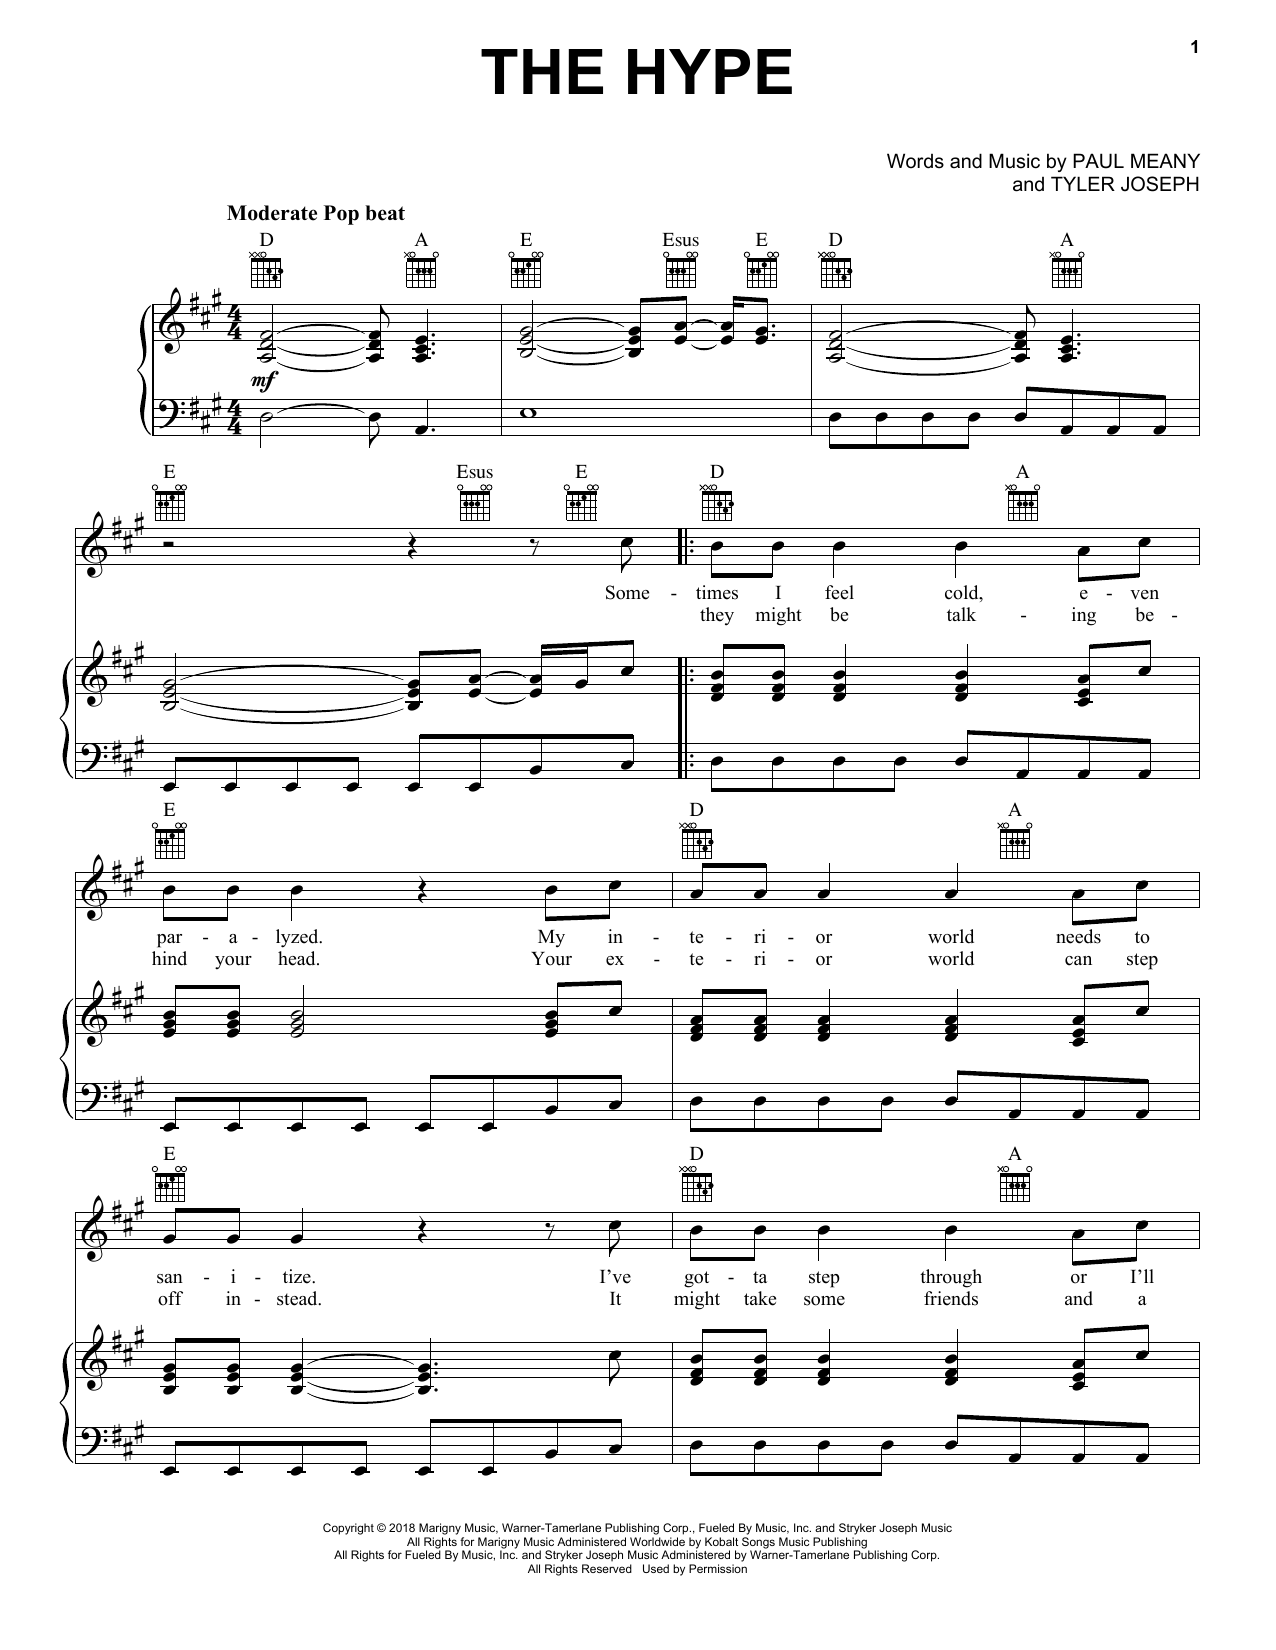 sti Supermarked Blåt mærke Twenty One Pilots "The Hype" Sheet Music PDF Notes, Chords | Pop Score  Ukulele Download Printable. SKU: 439730